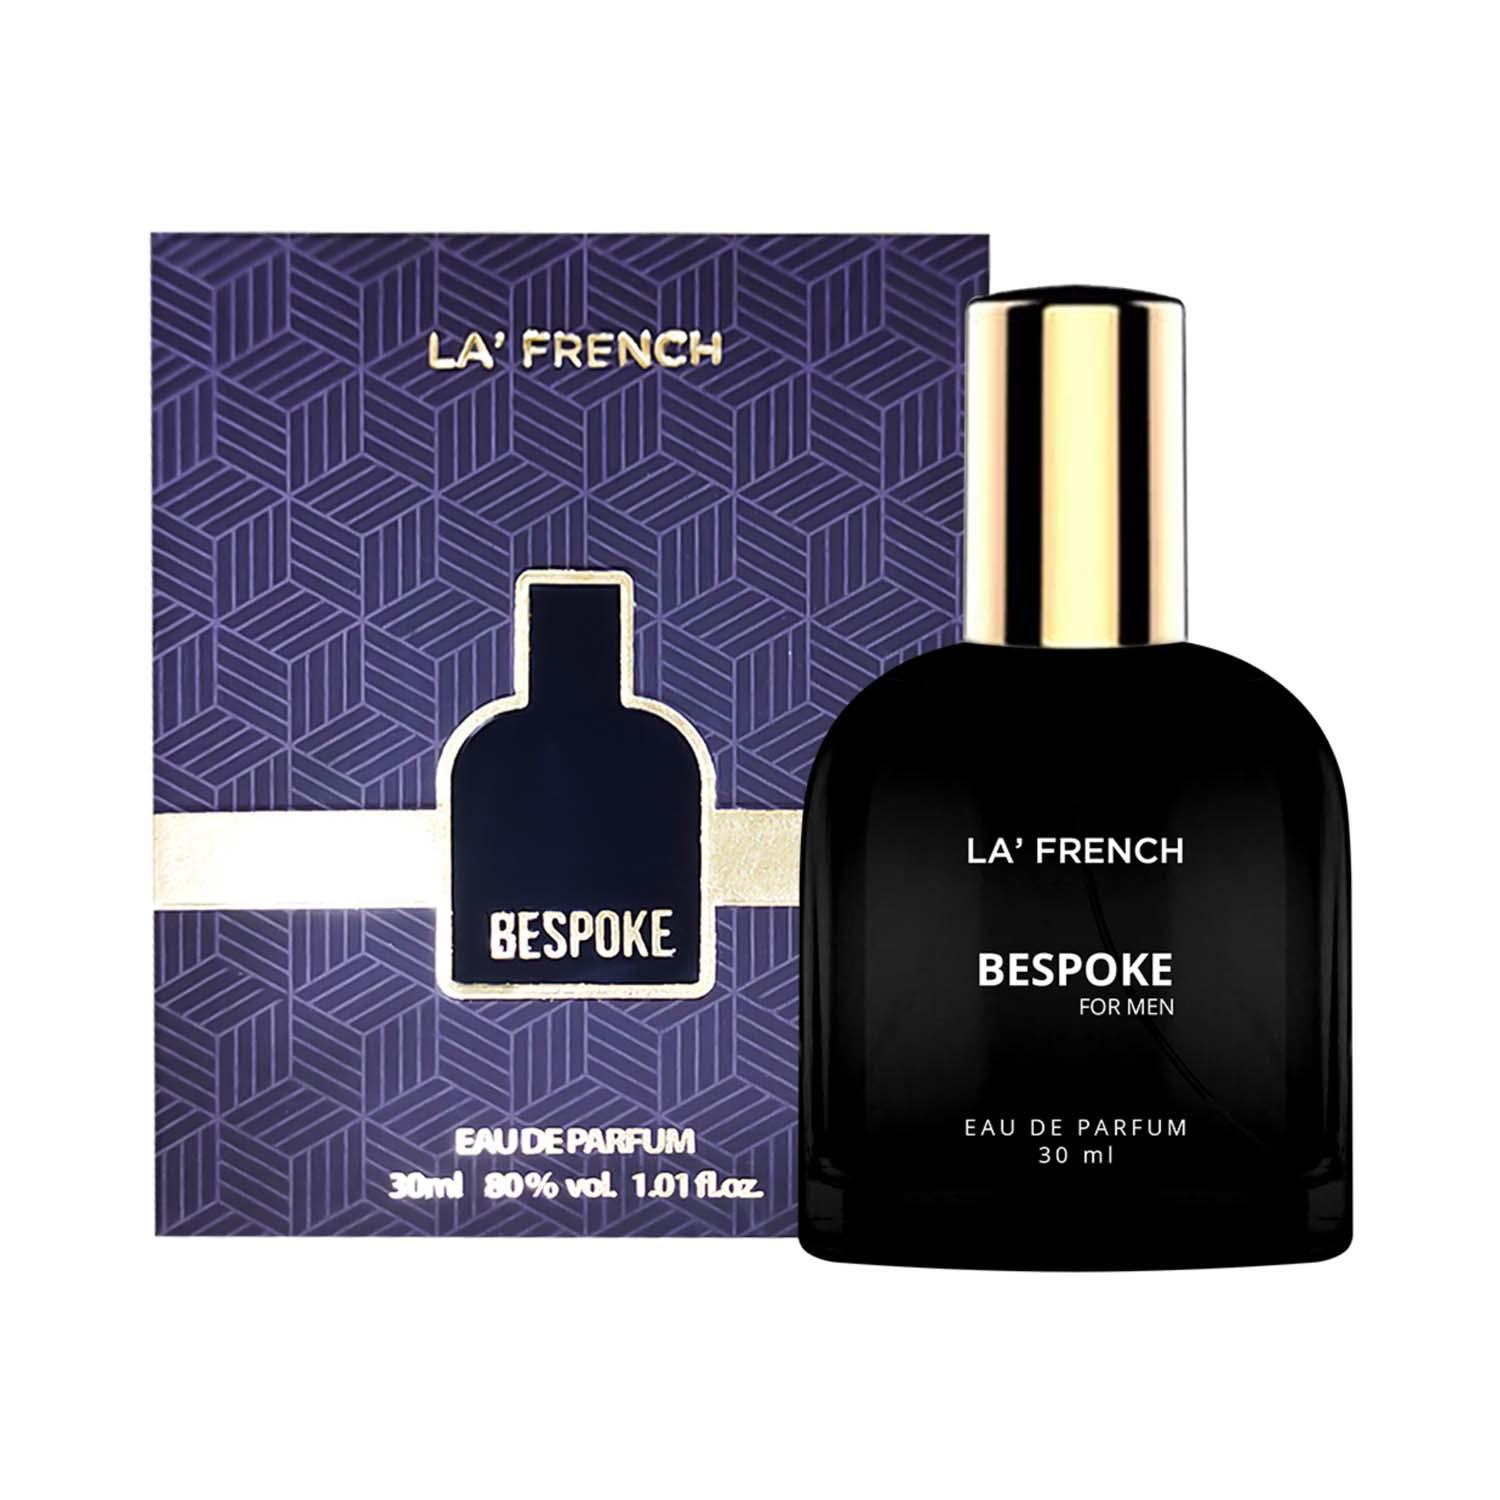 LA' French | LA' French Bespoke Eau De Parfum For Women (30ml)